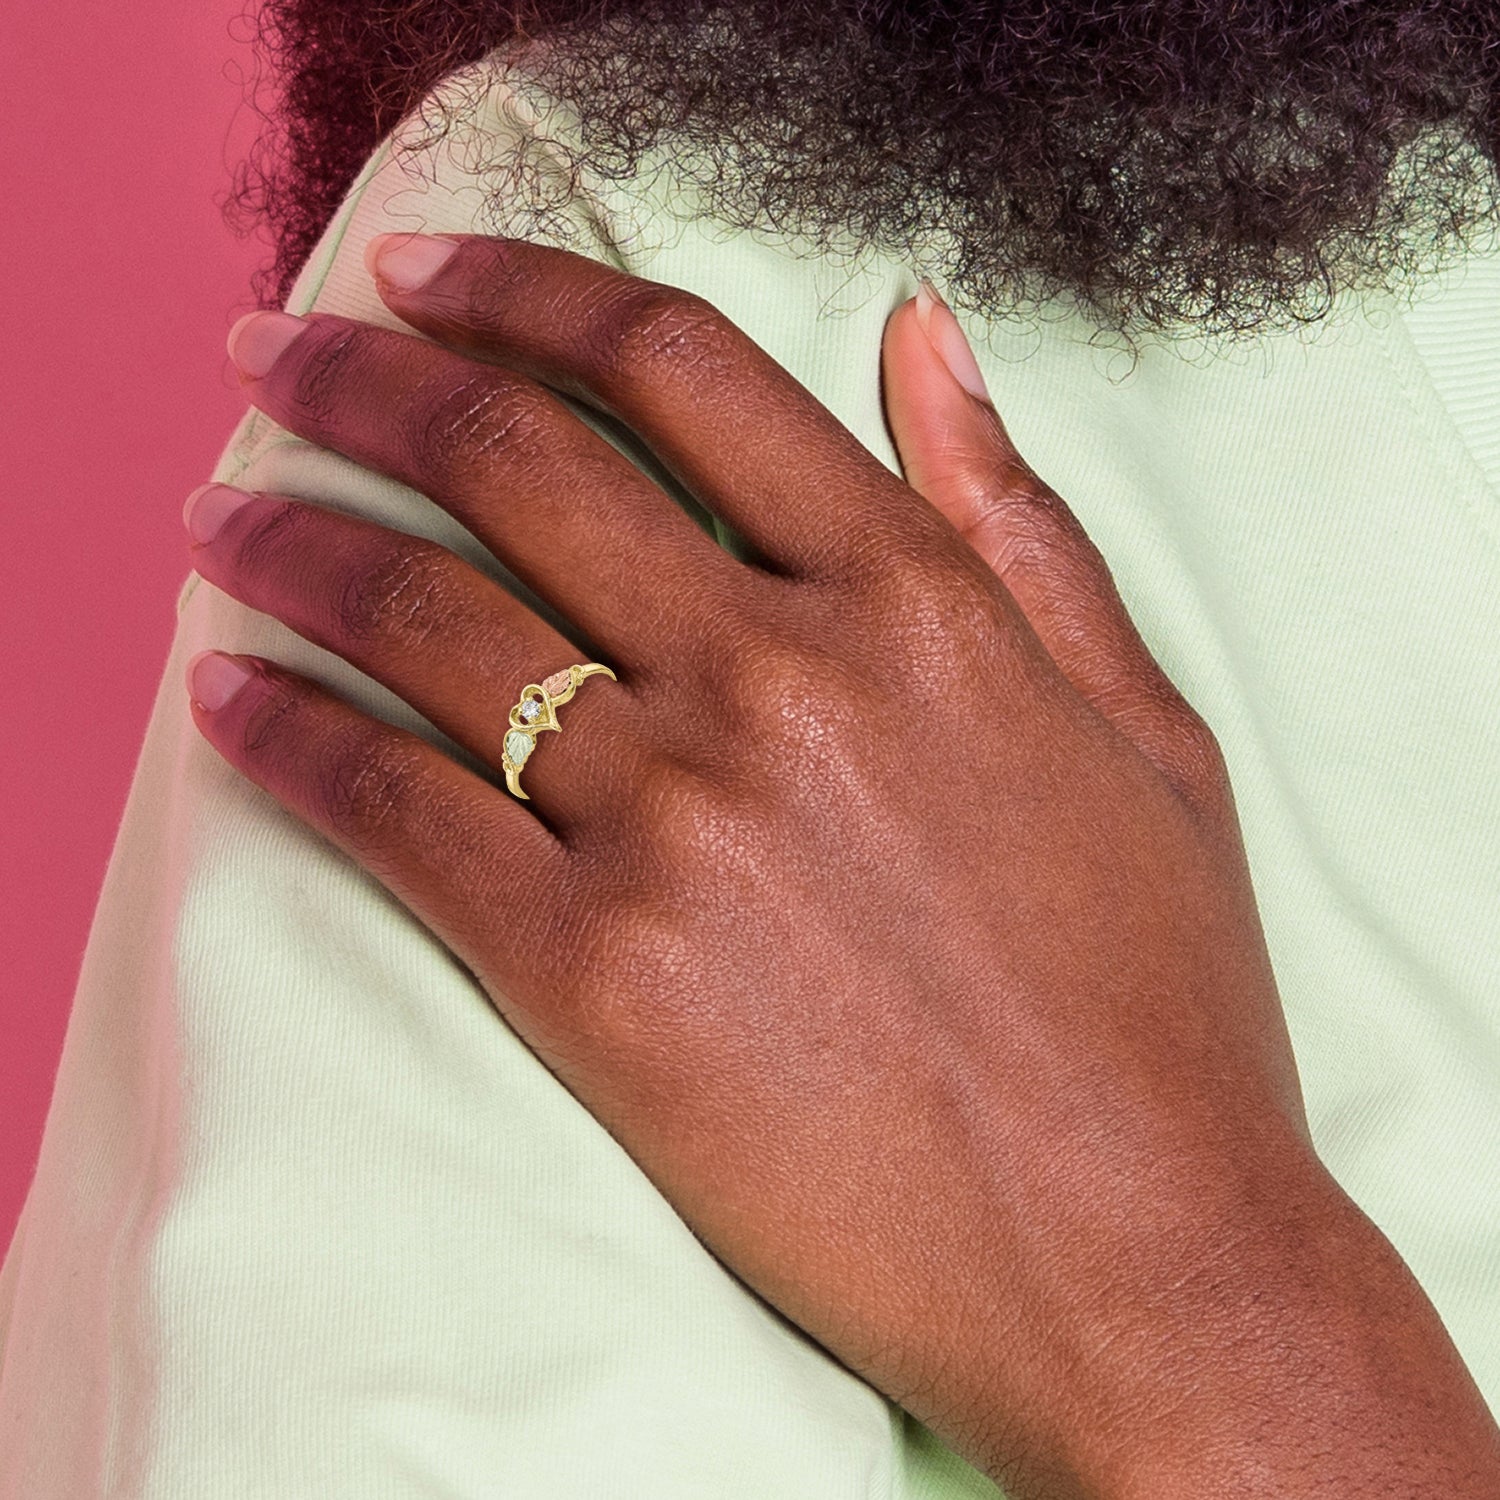 10k Tri-color Black Hills Gold Diamond Heart Ring